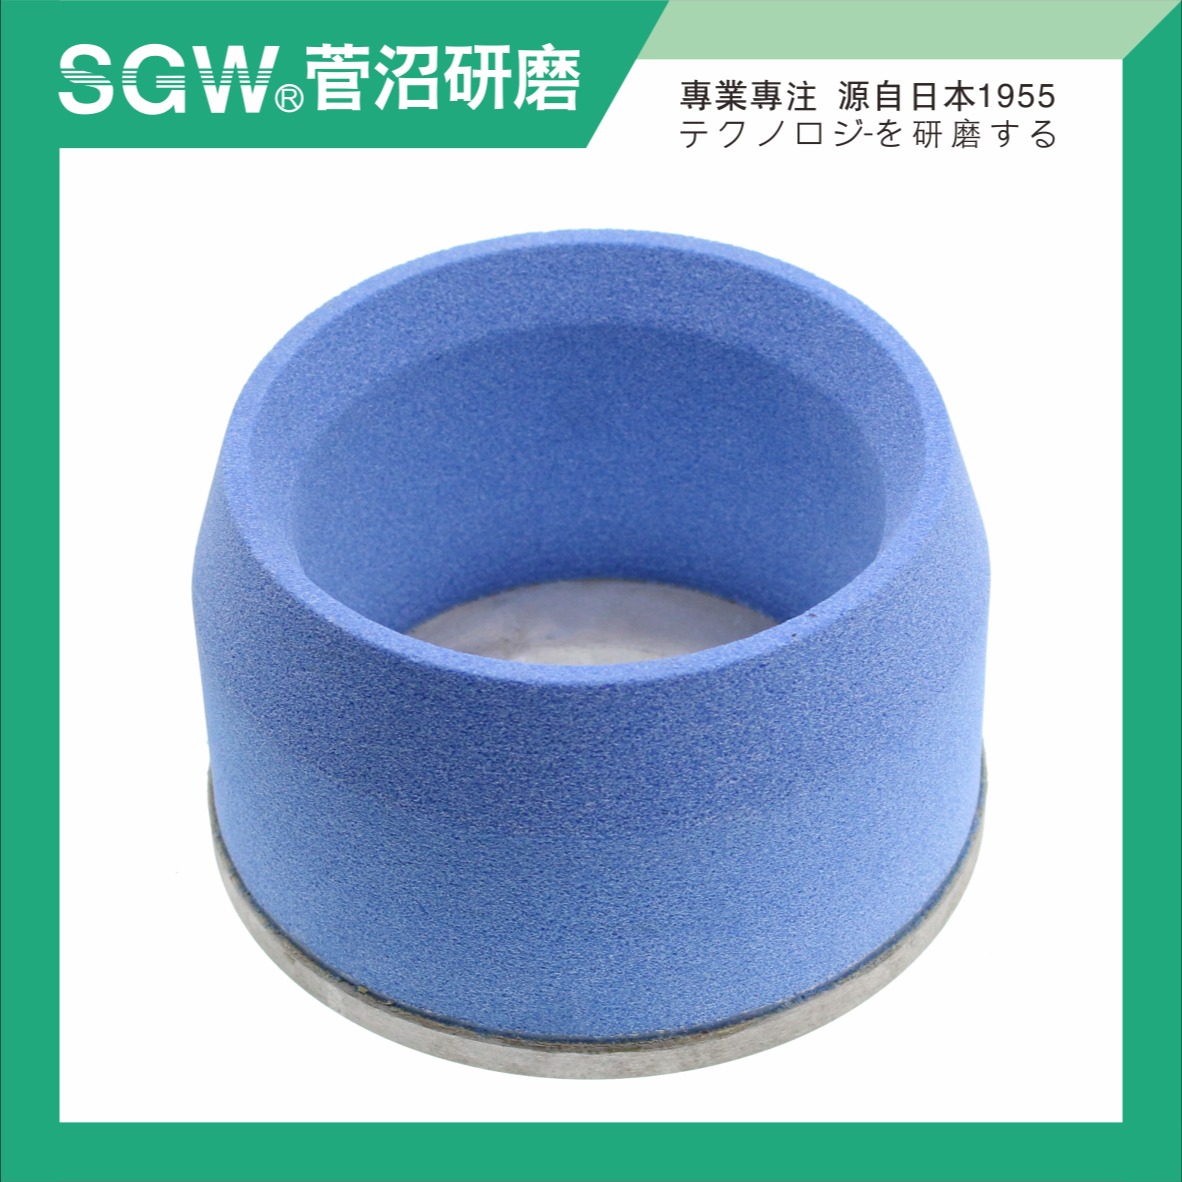 SG砂轮 陶瓷 齿轮 磨弧齿 磨齿条 不掉齿 高强度 保形性好 5SG 不伤工件